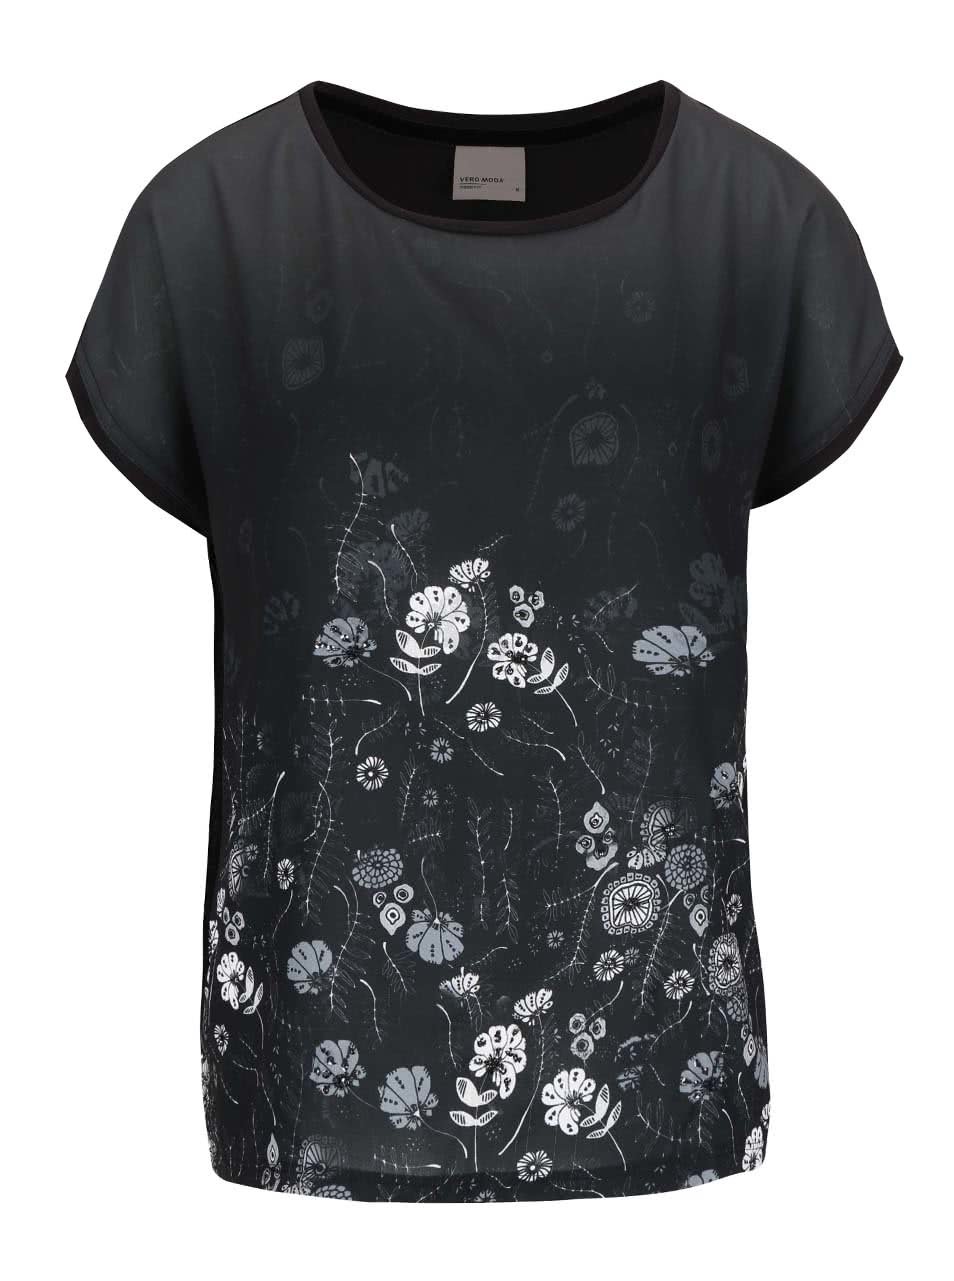 Černé tričko s potiskem květin Vero Moda Sia